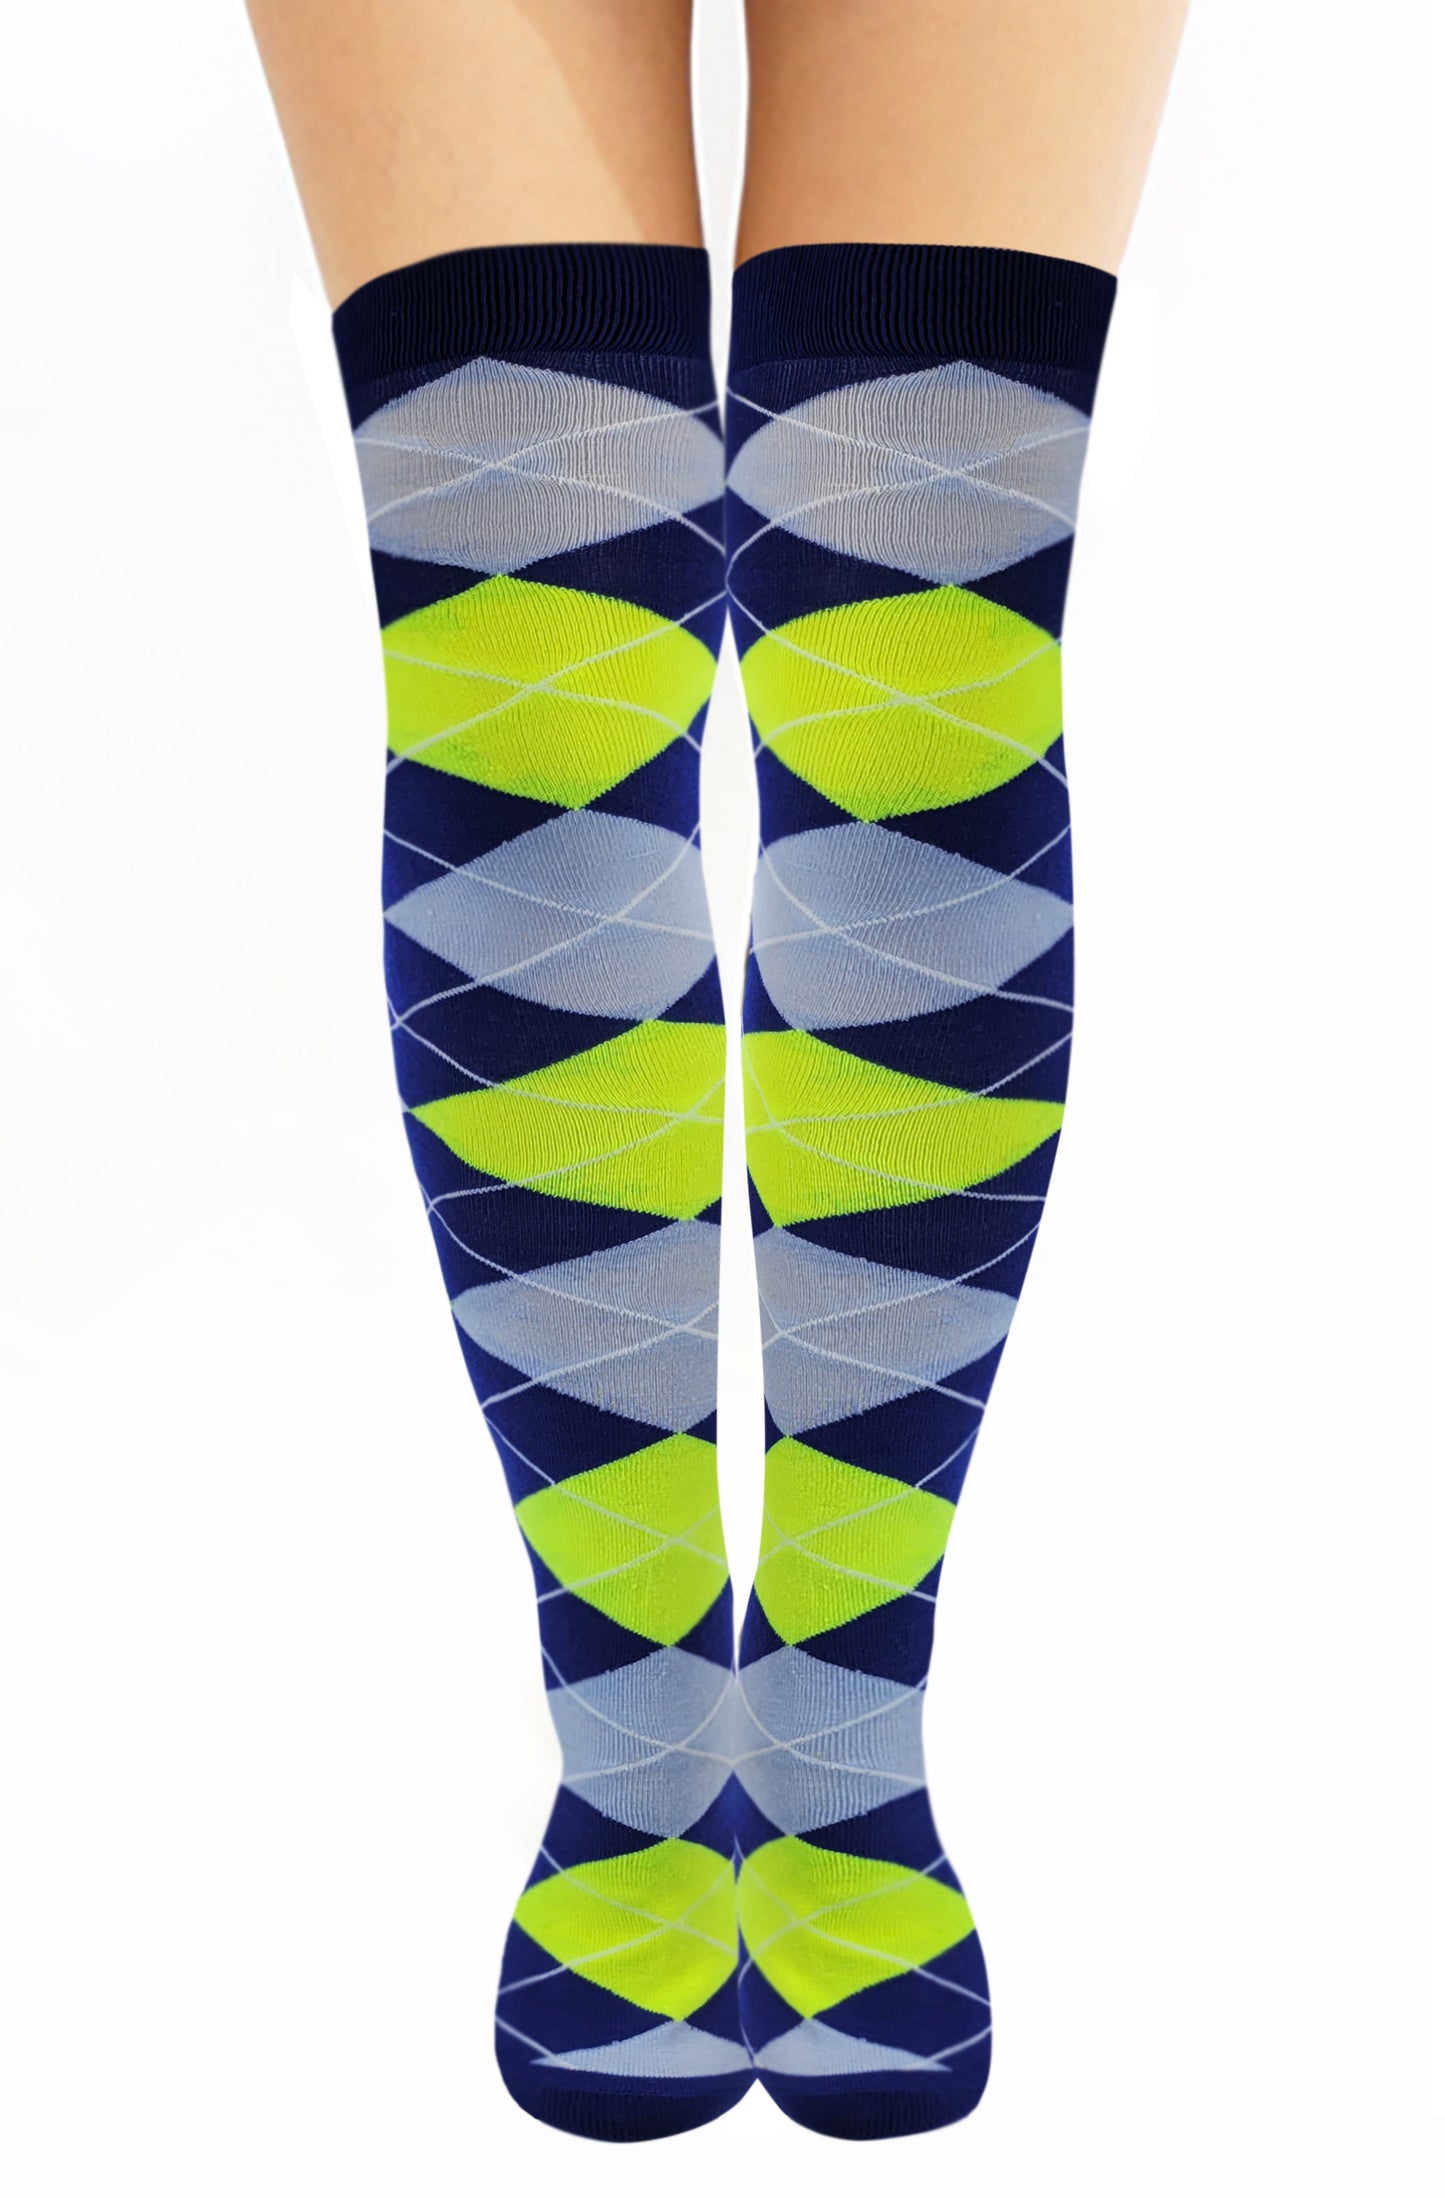 Thigh High Over the Knee Socks | Multi Argyle Design | Women (6 Pairs)